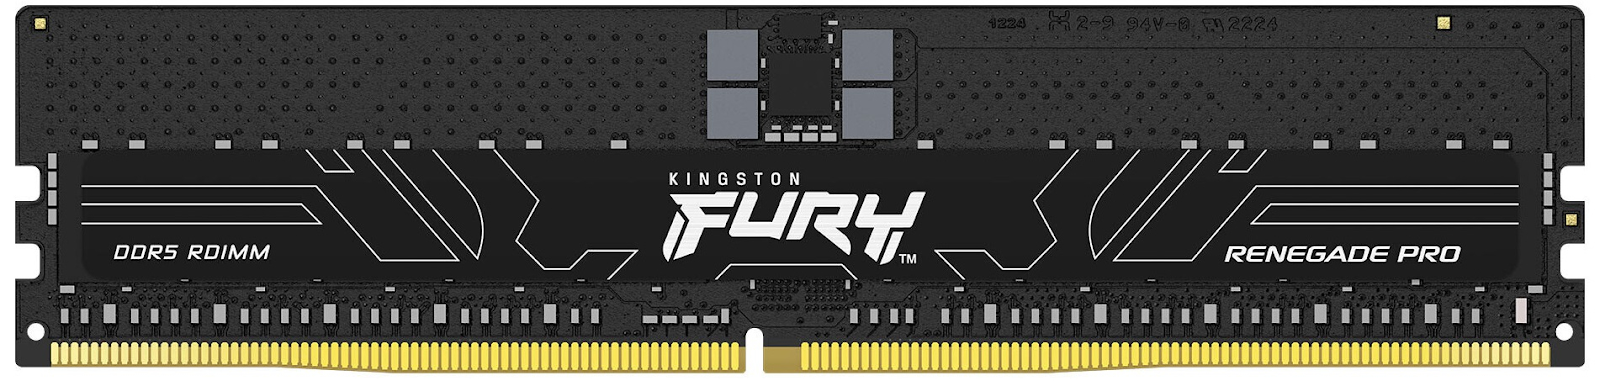 DDR5 RDIMM Kingston Fury RENEGADE PRO Ram Kiti